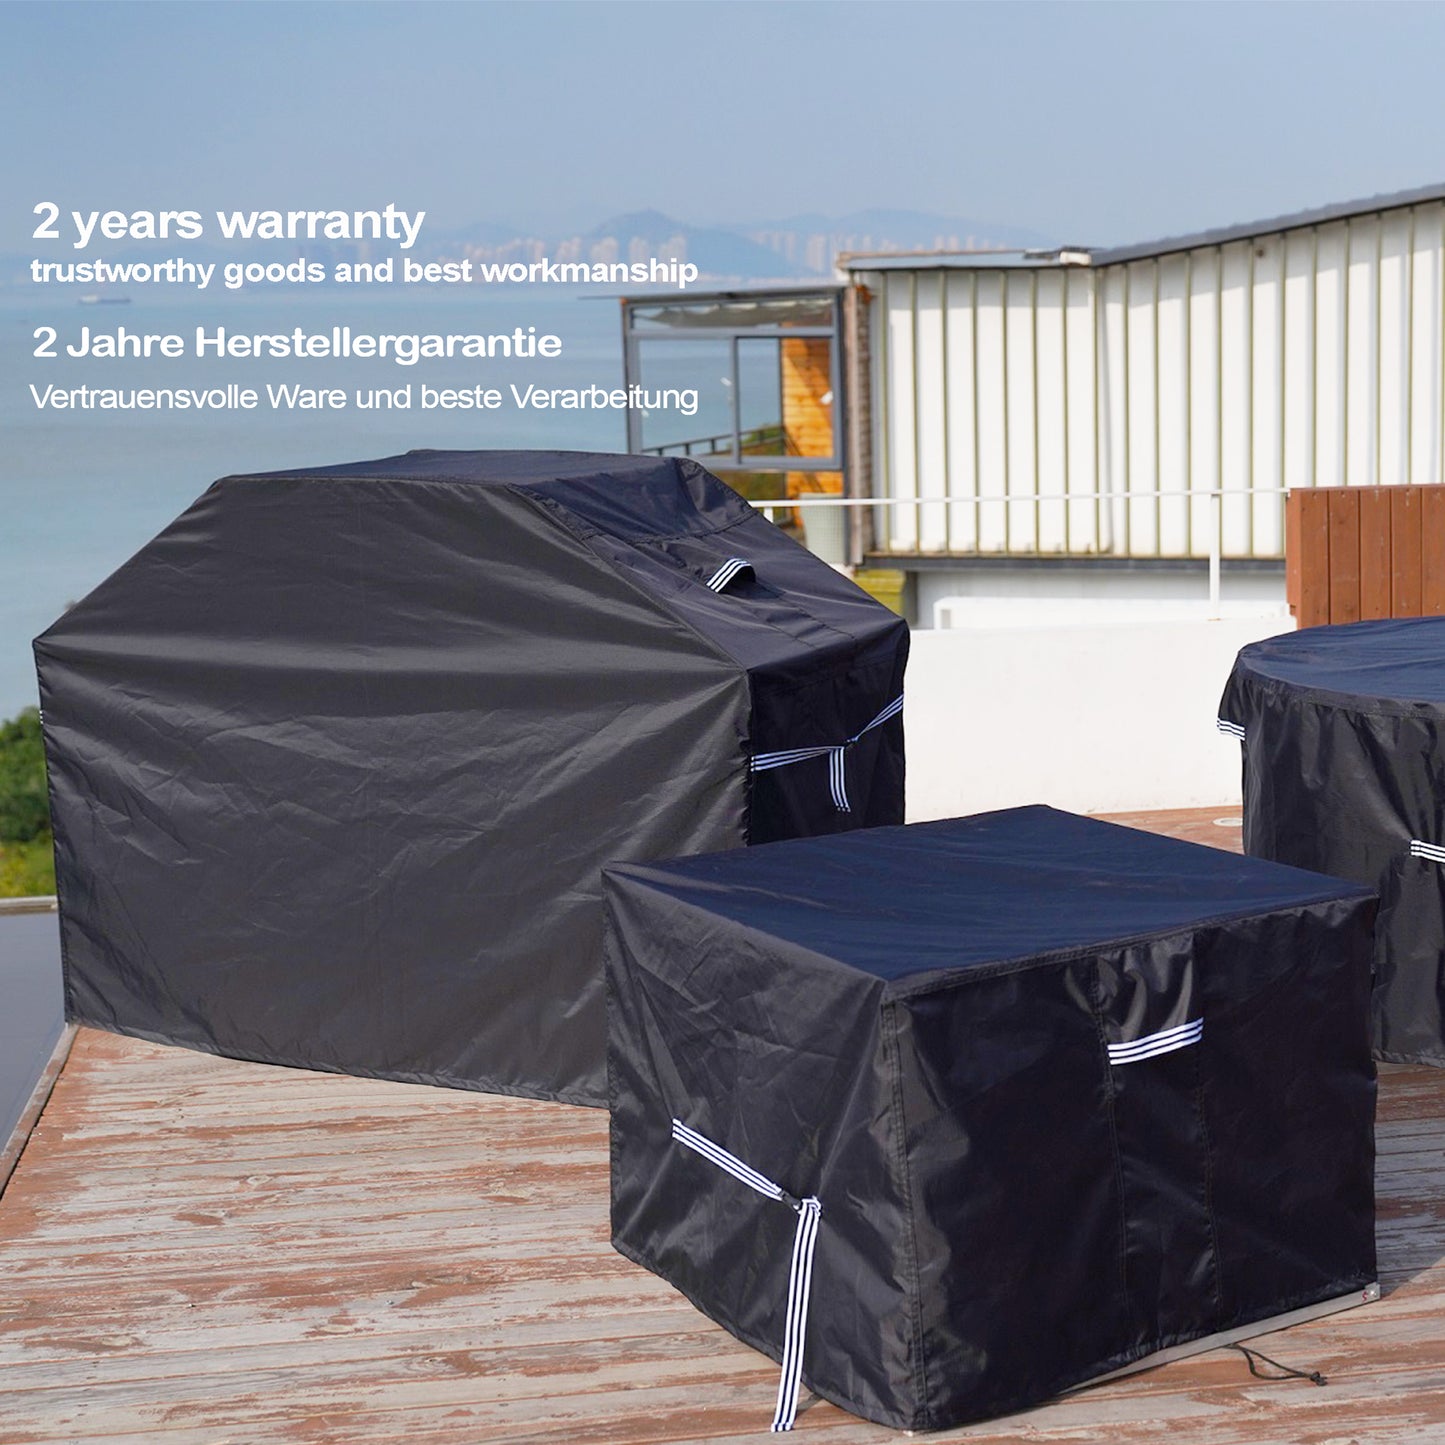 Black Premium Gartenliegenhülle  200x75x40cm / garden lounger cover /  atmungsaktiv / breathable